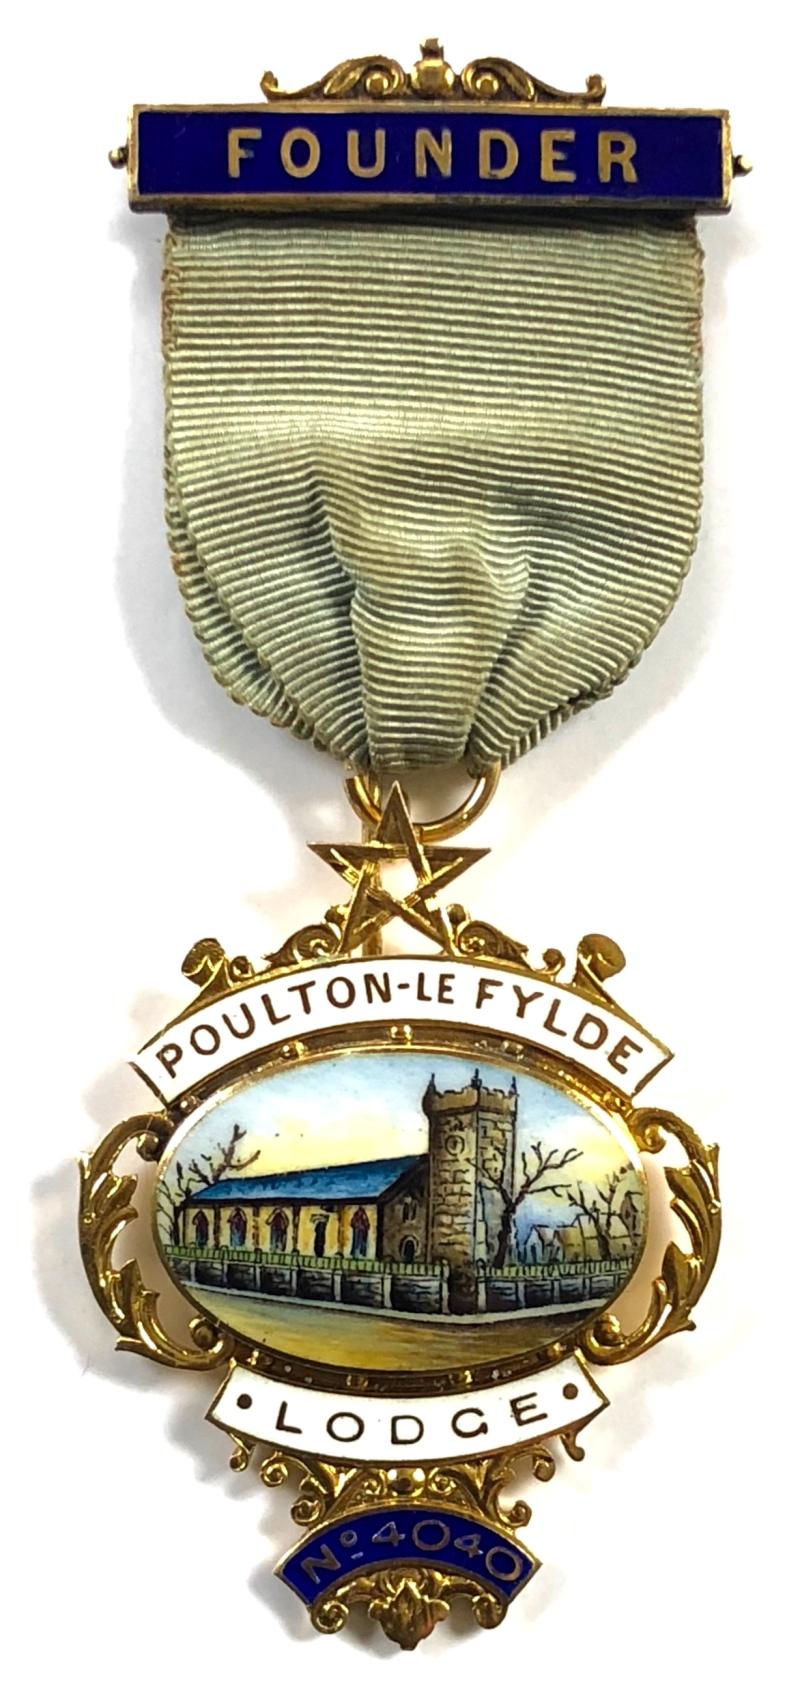 Poulton le Fylde Lodge No 4040 Masonic Founder's Jewel 1919 silver medal